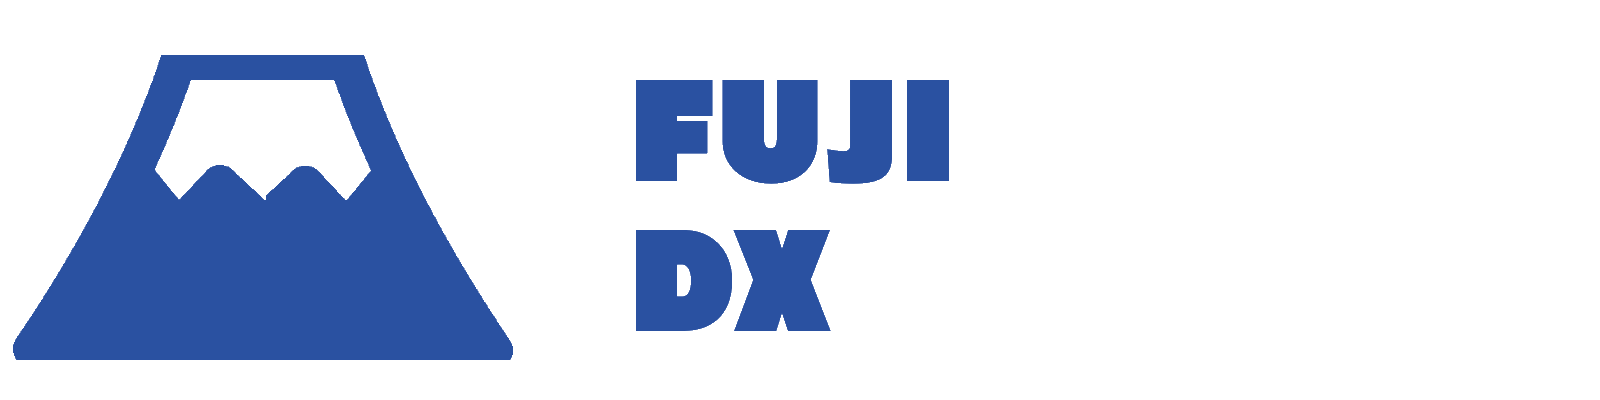 fujidx